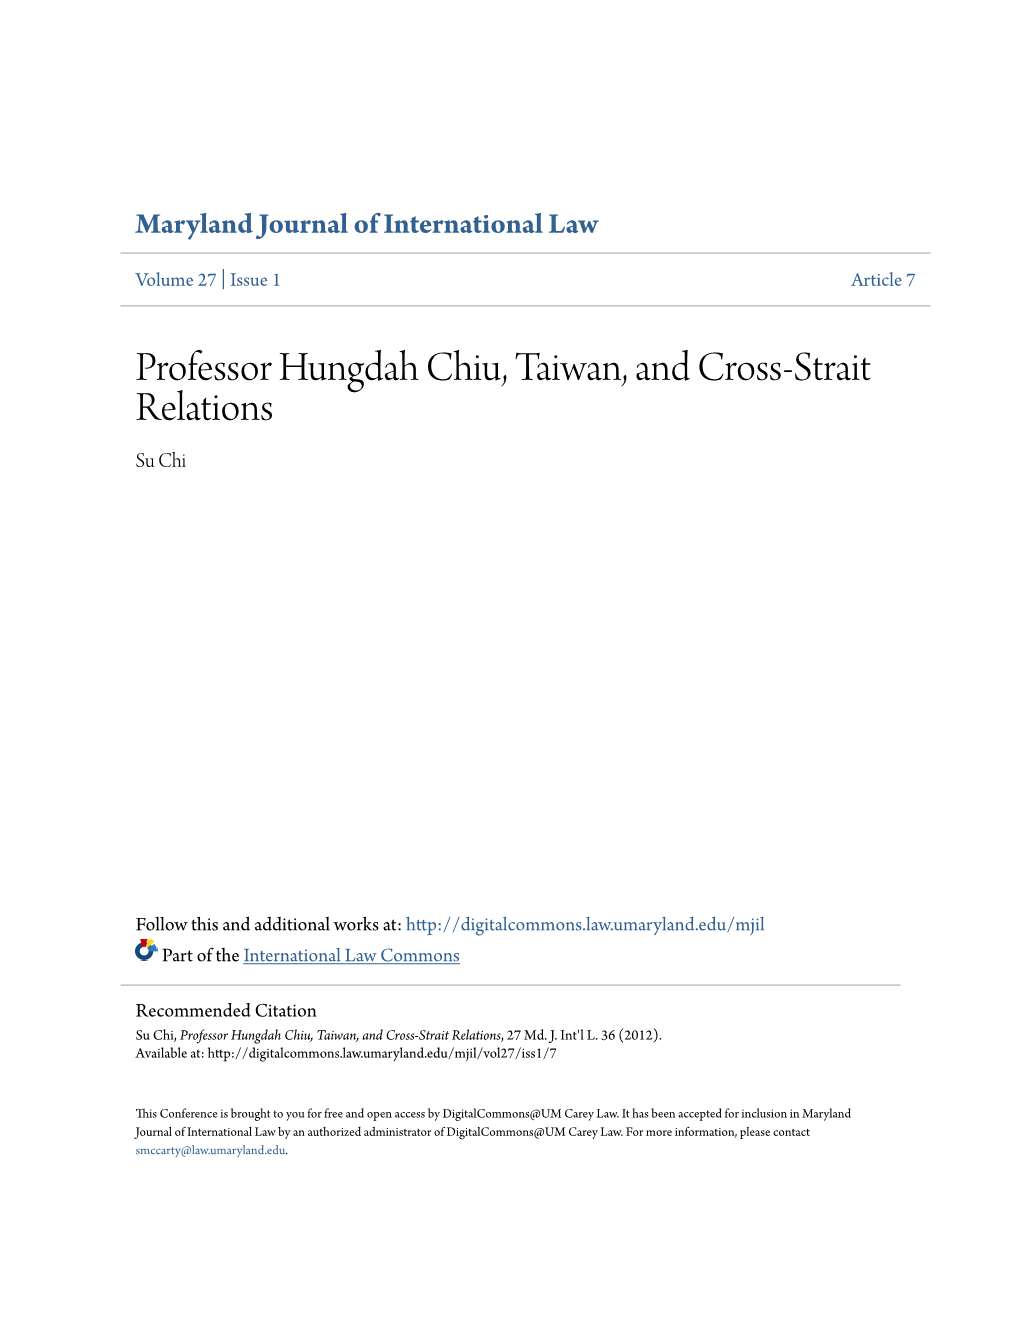 Professor Hungdah Chiu, Taiwan, and Cross-Strait Relations Su Chi